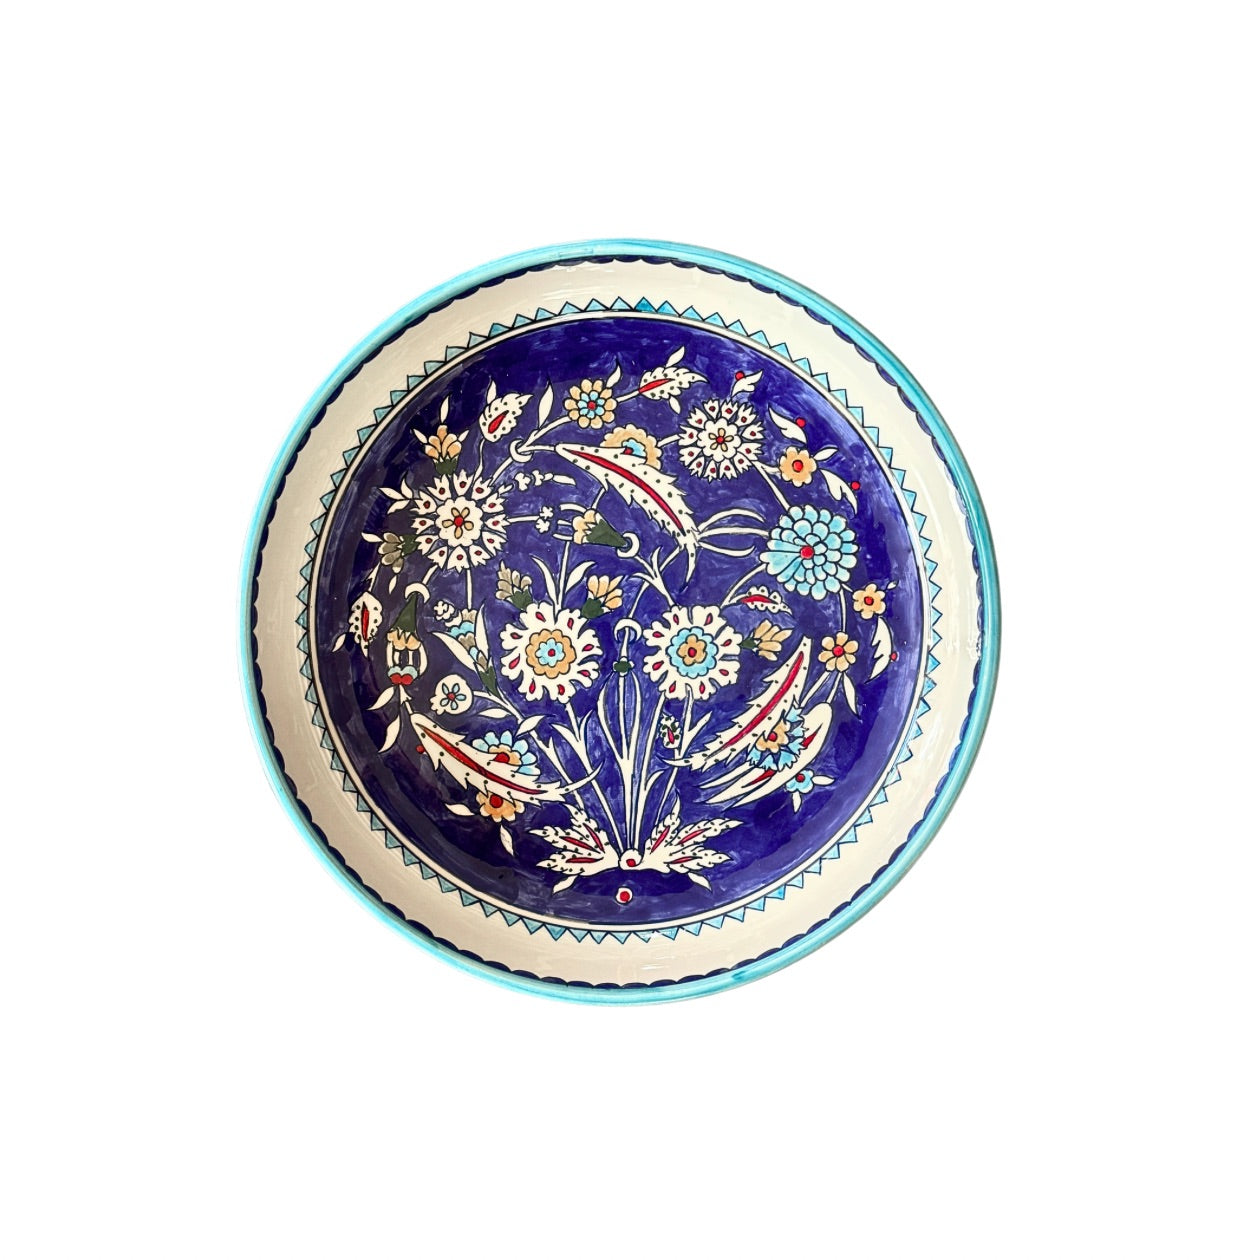 Ceramic Serving Bowl (11") - Blue Flowers